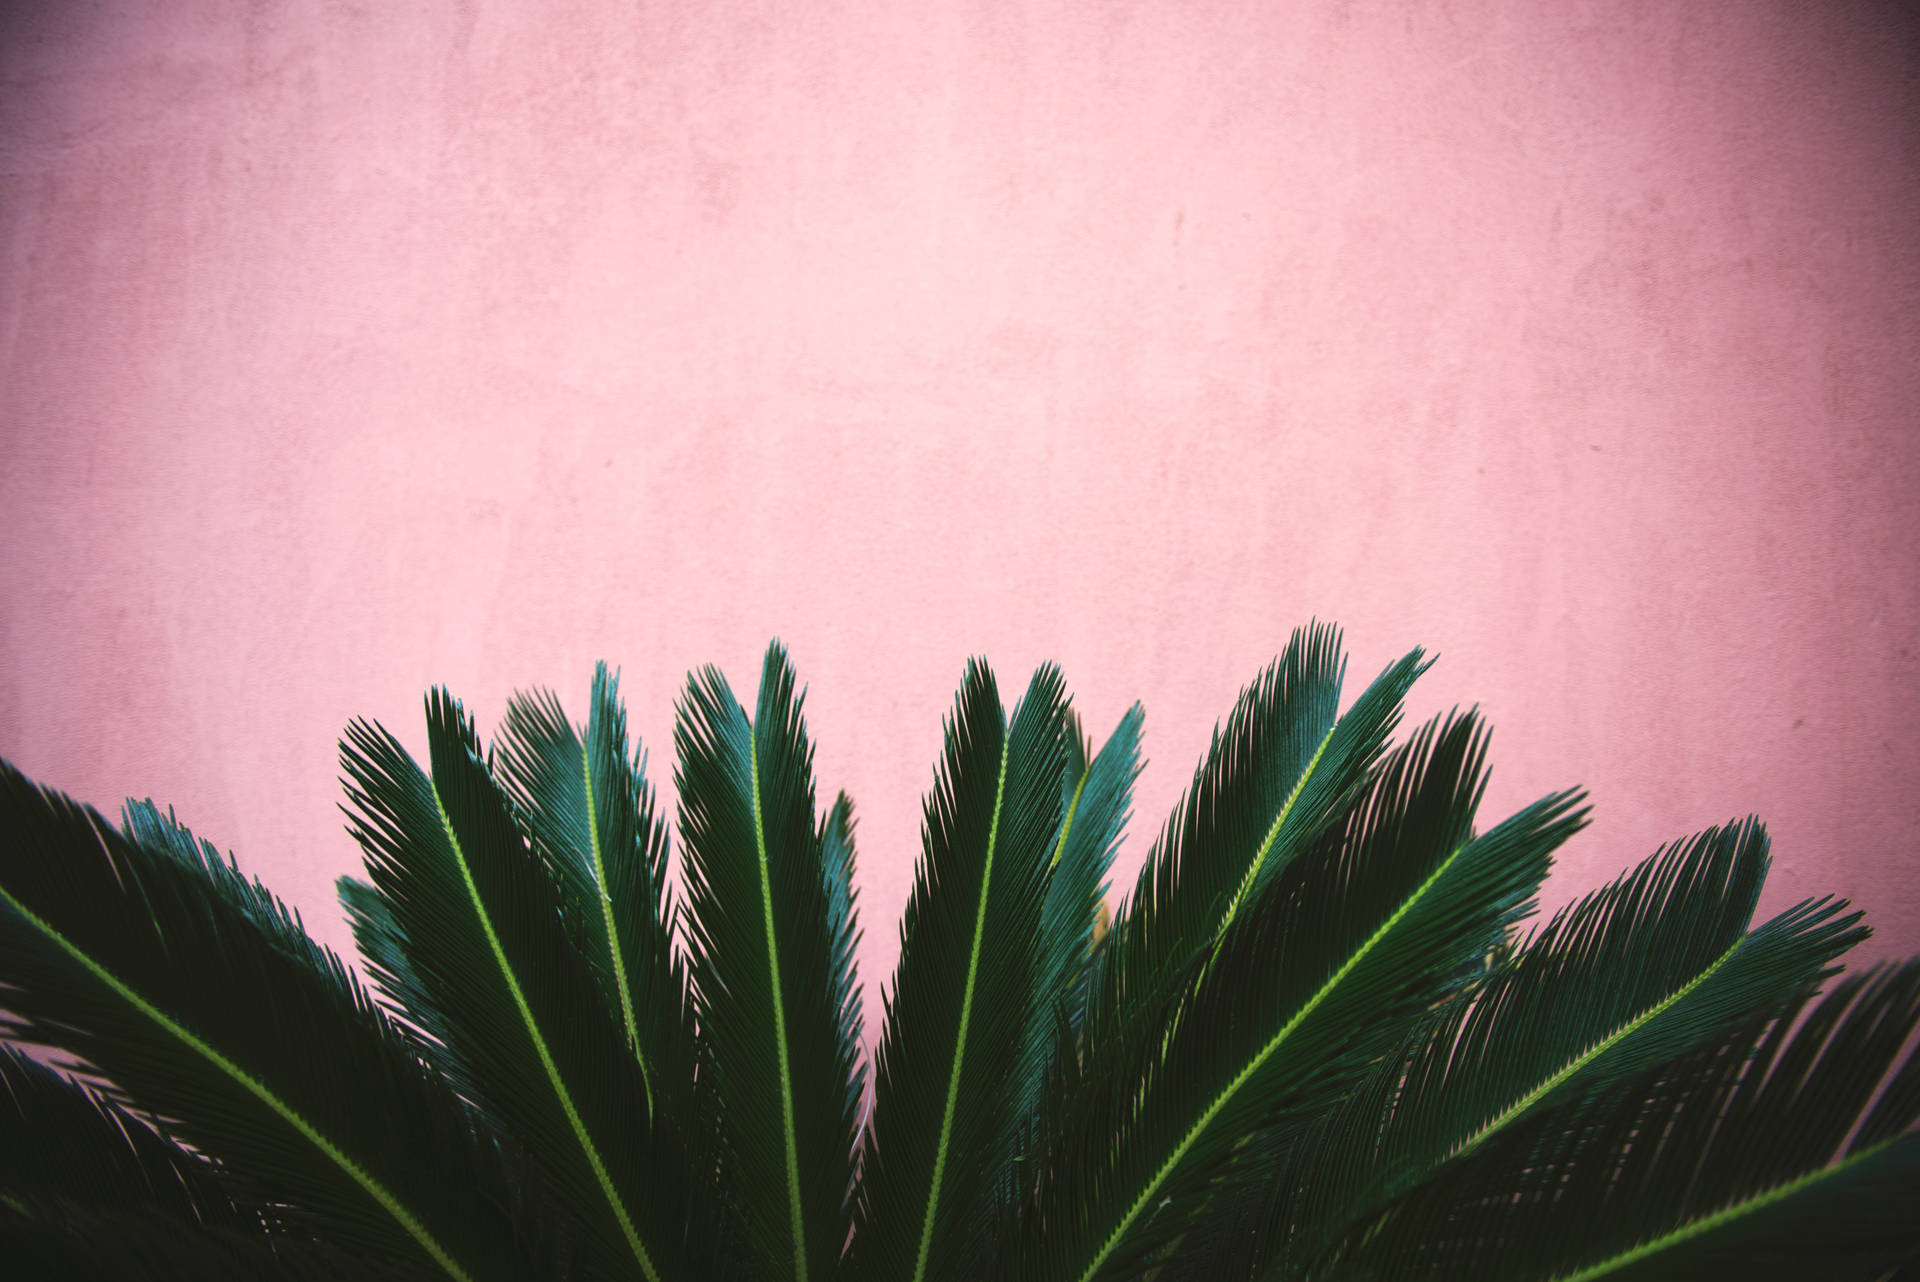 Striking Plant Leaves against a Kawaii Pink Wall Wallpaper